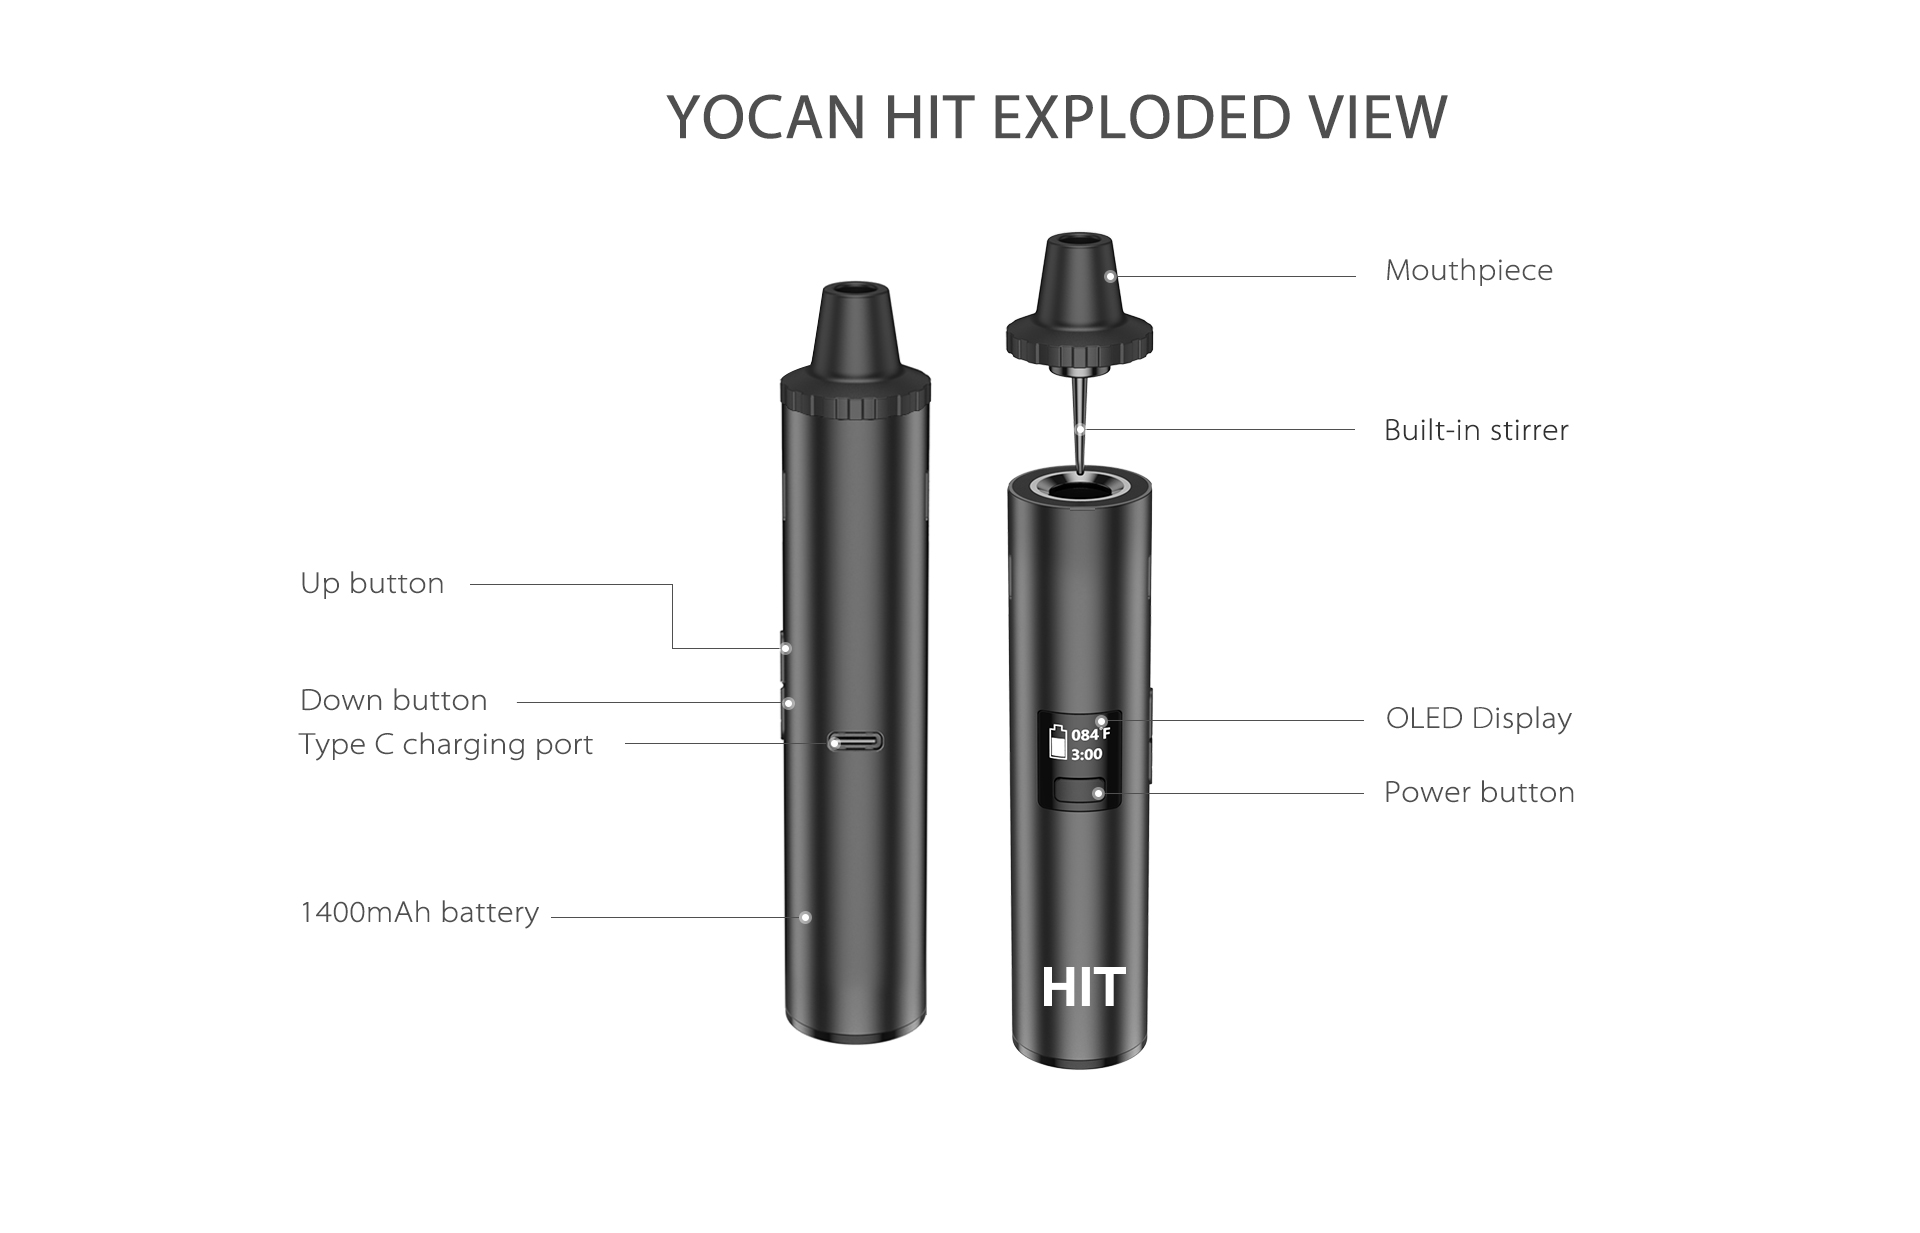 Yocan Hit Vaporizer Pen exploded view.